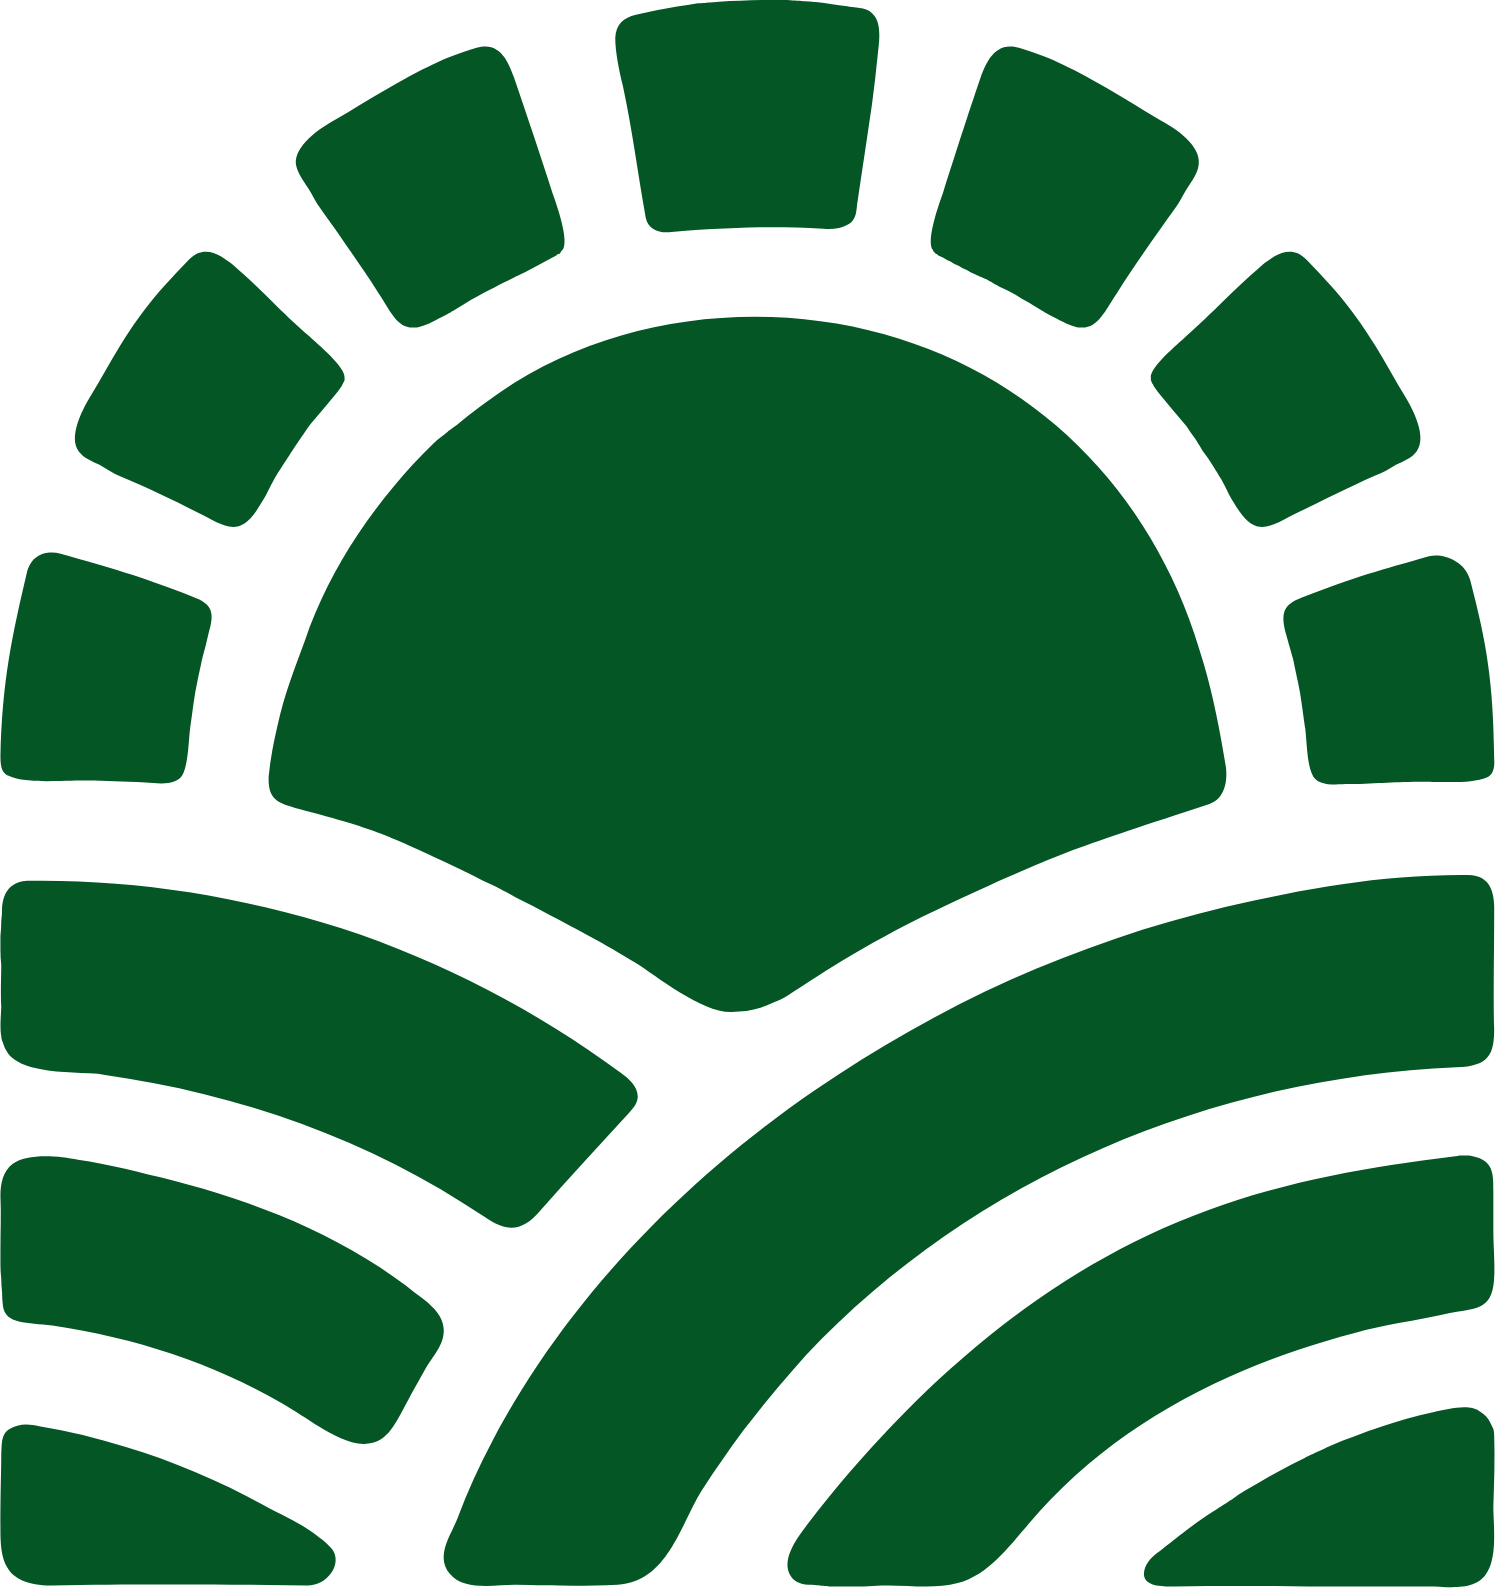 Green Thumb Industries logo (transparent PNG)